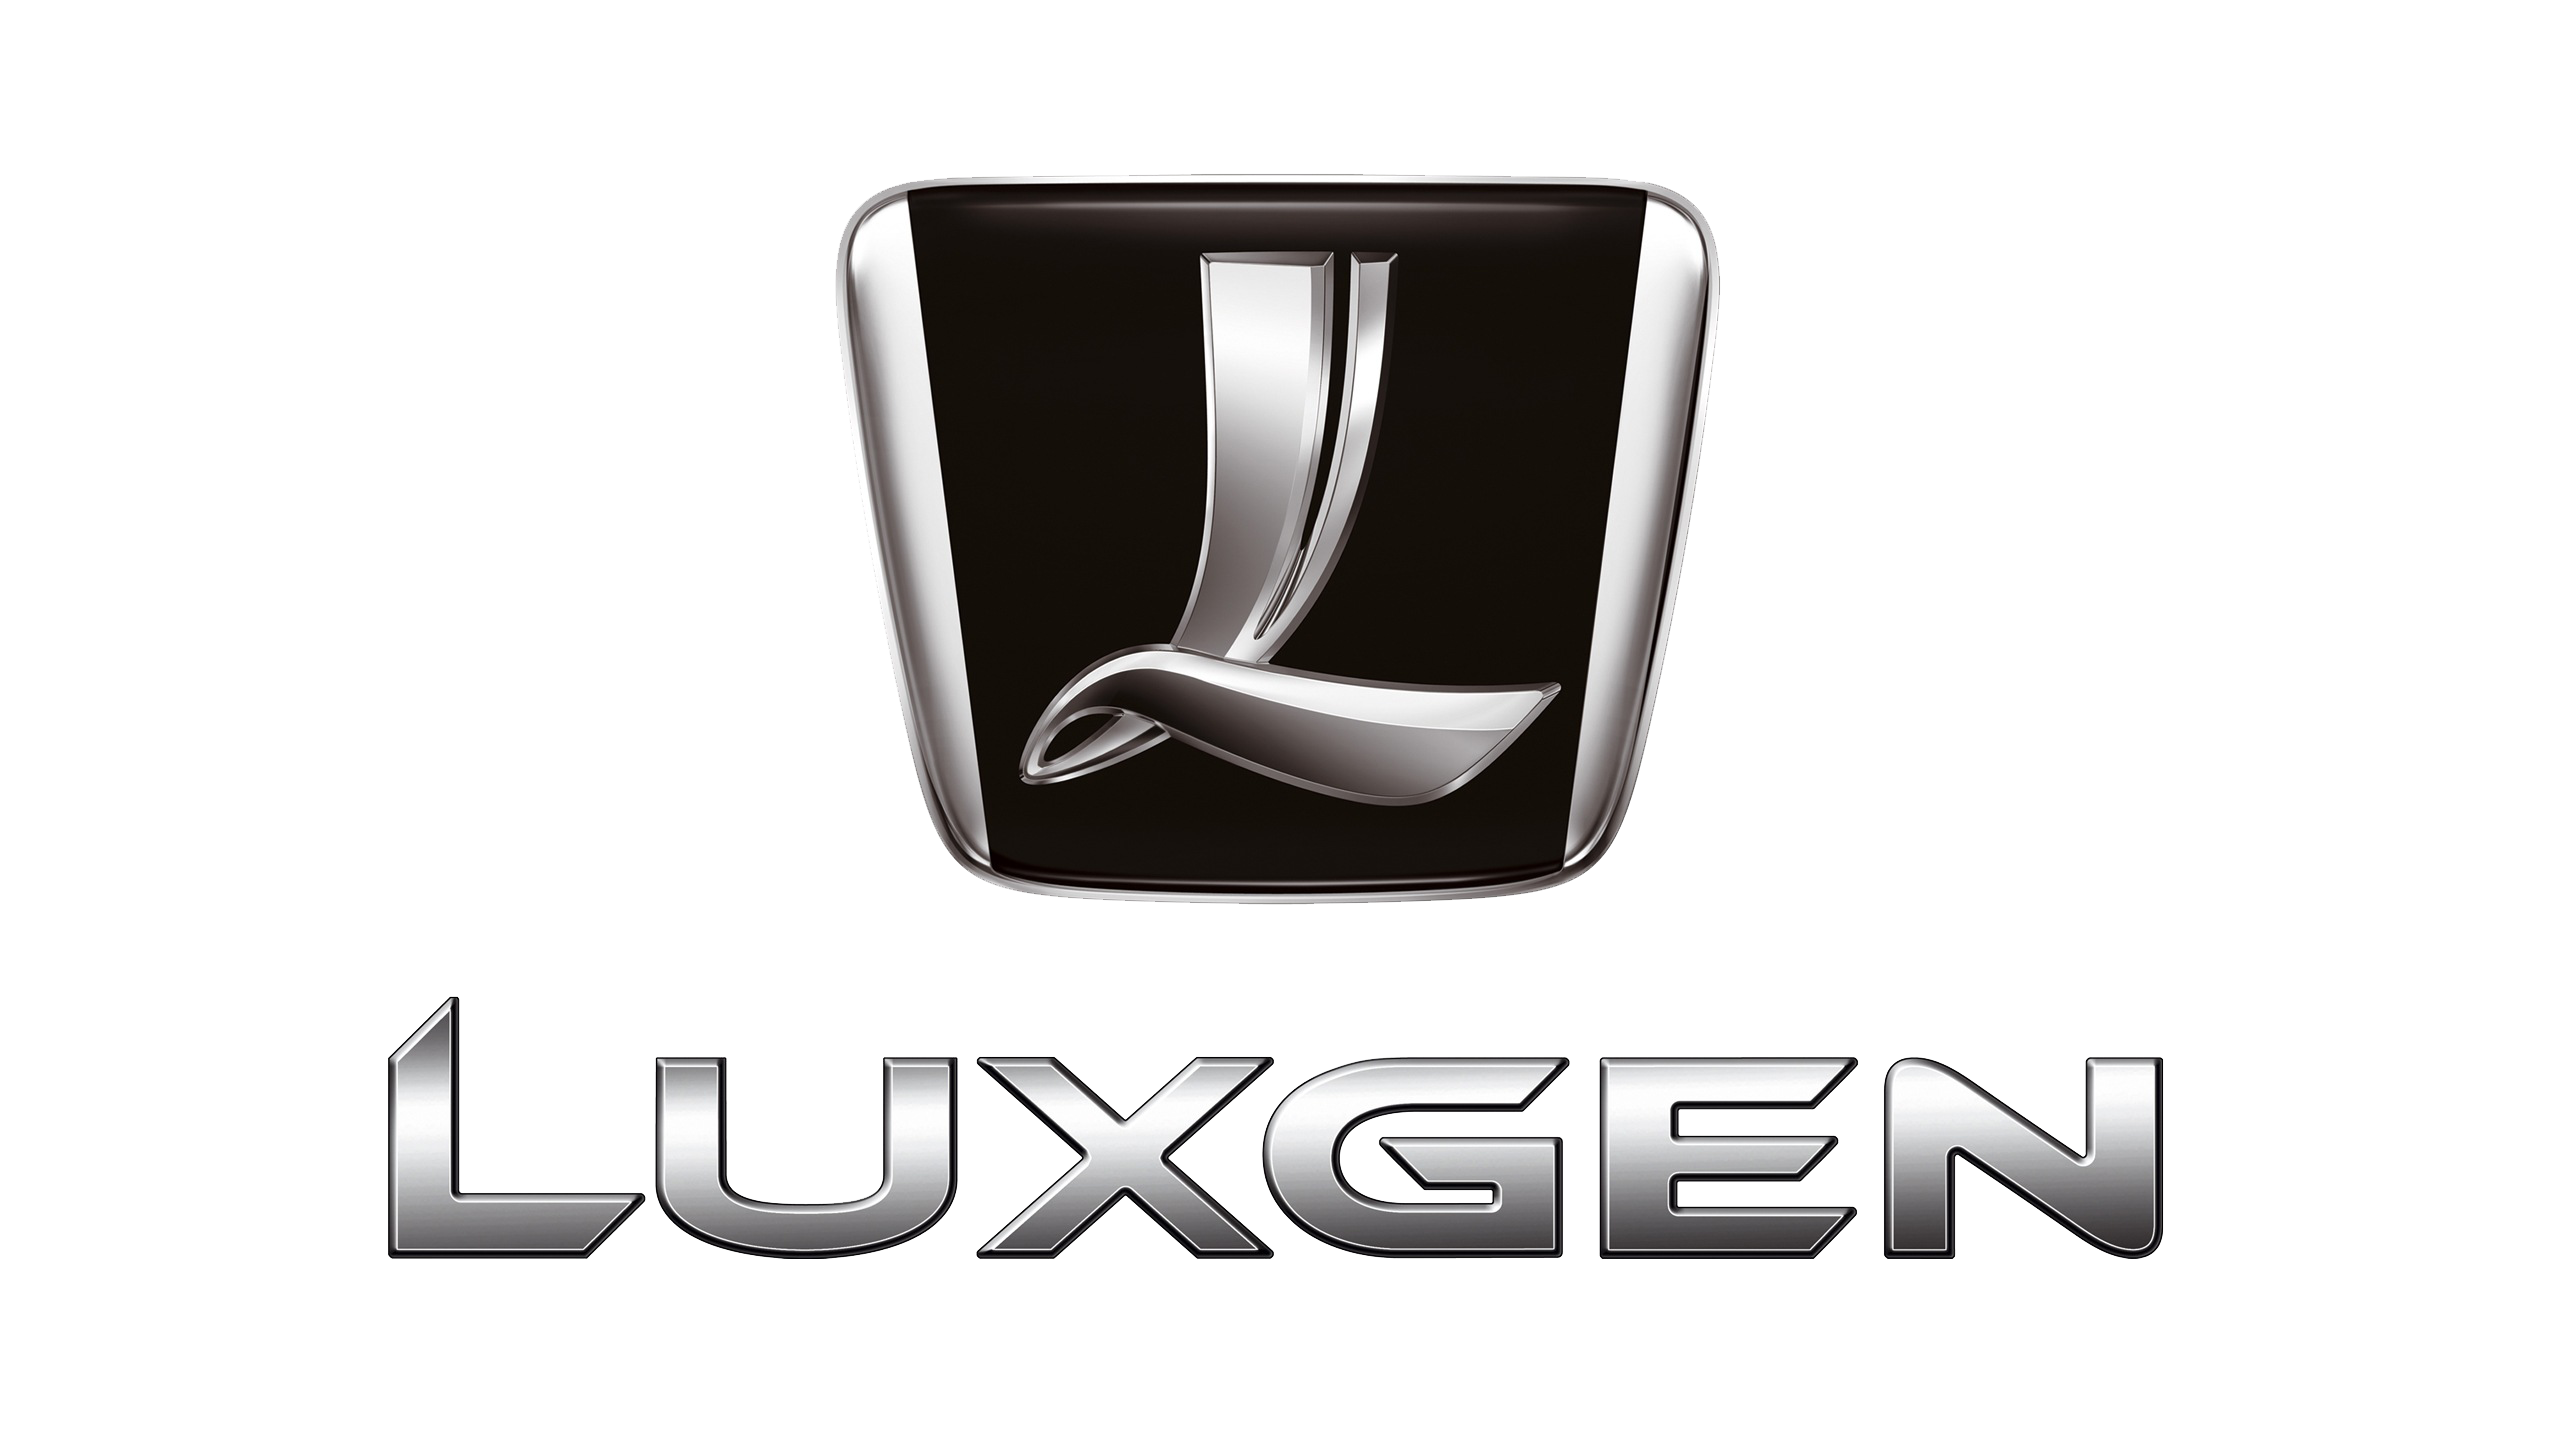 Luxgen-logo-2009-2560x1440.png